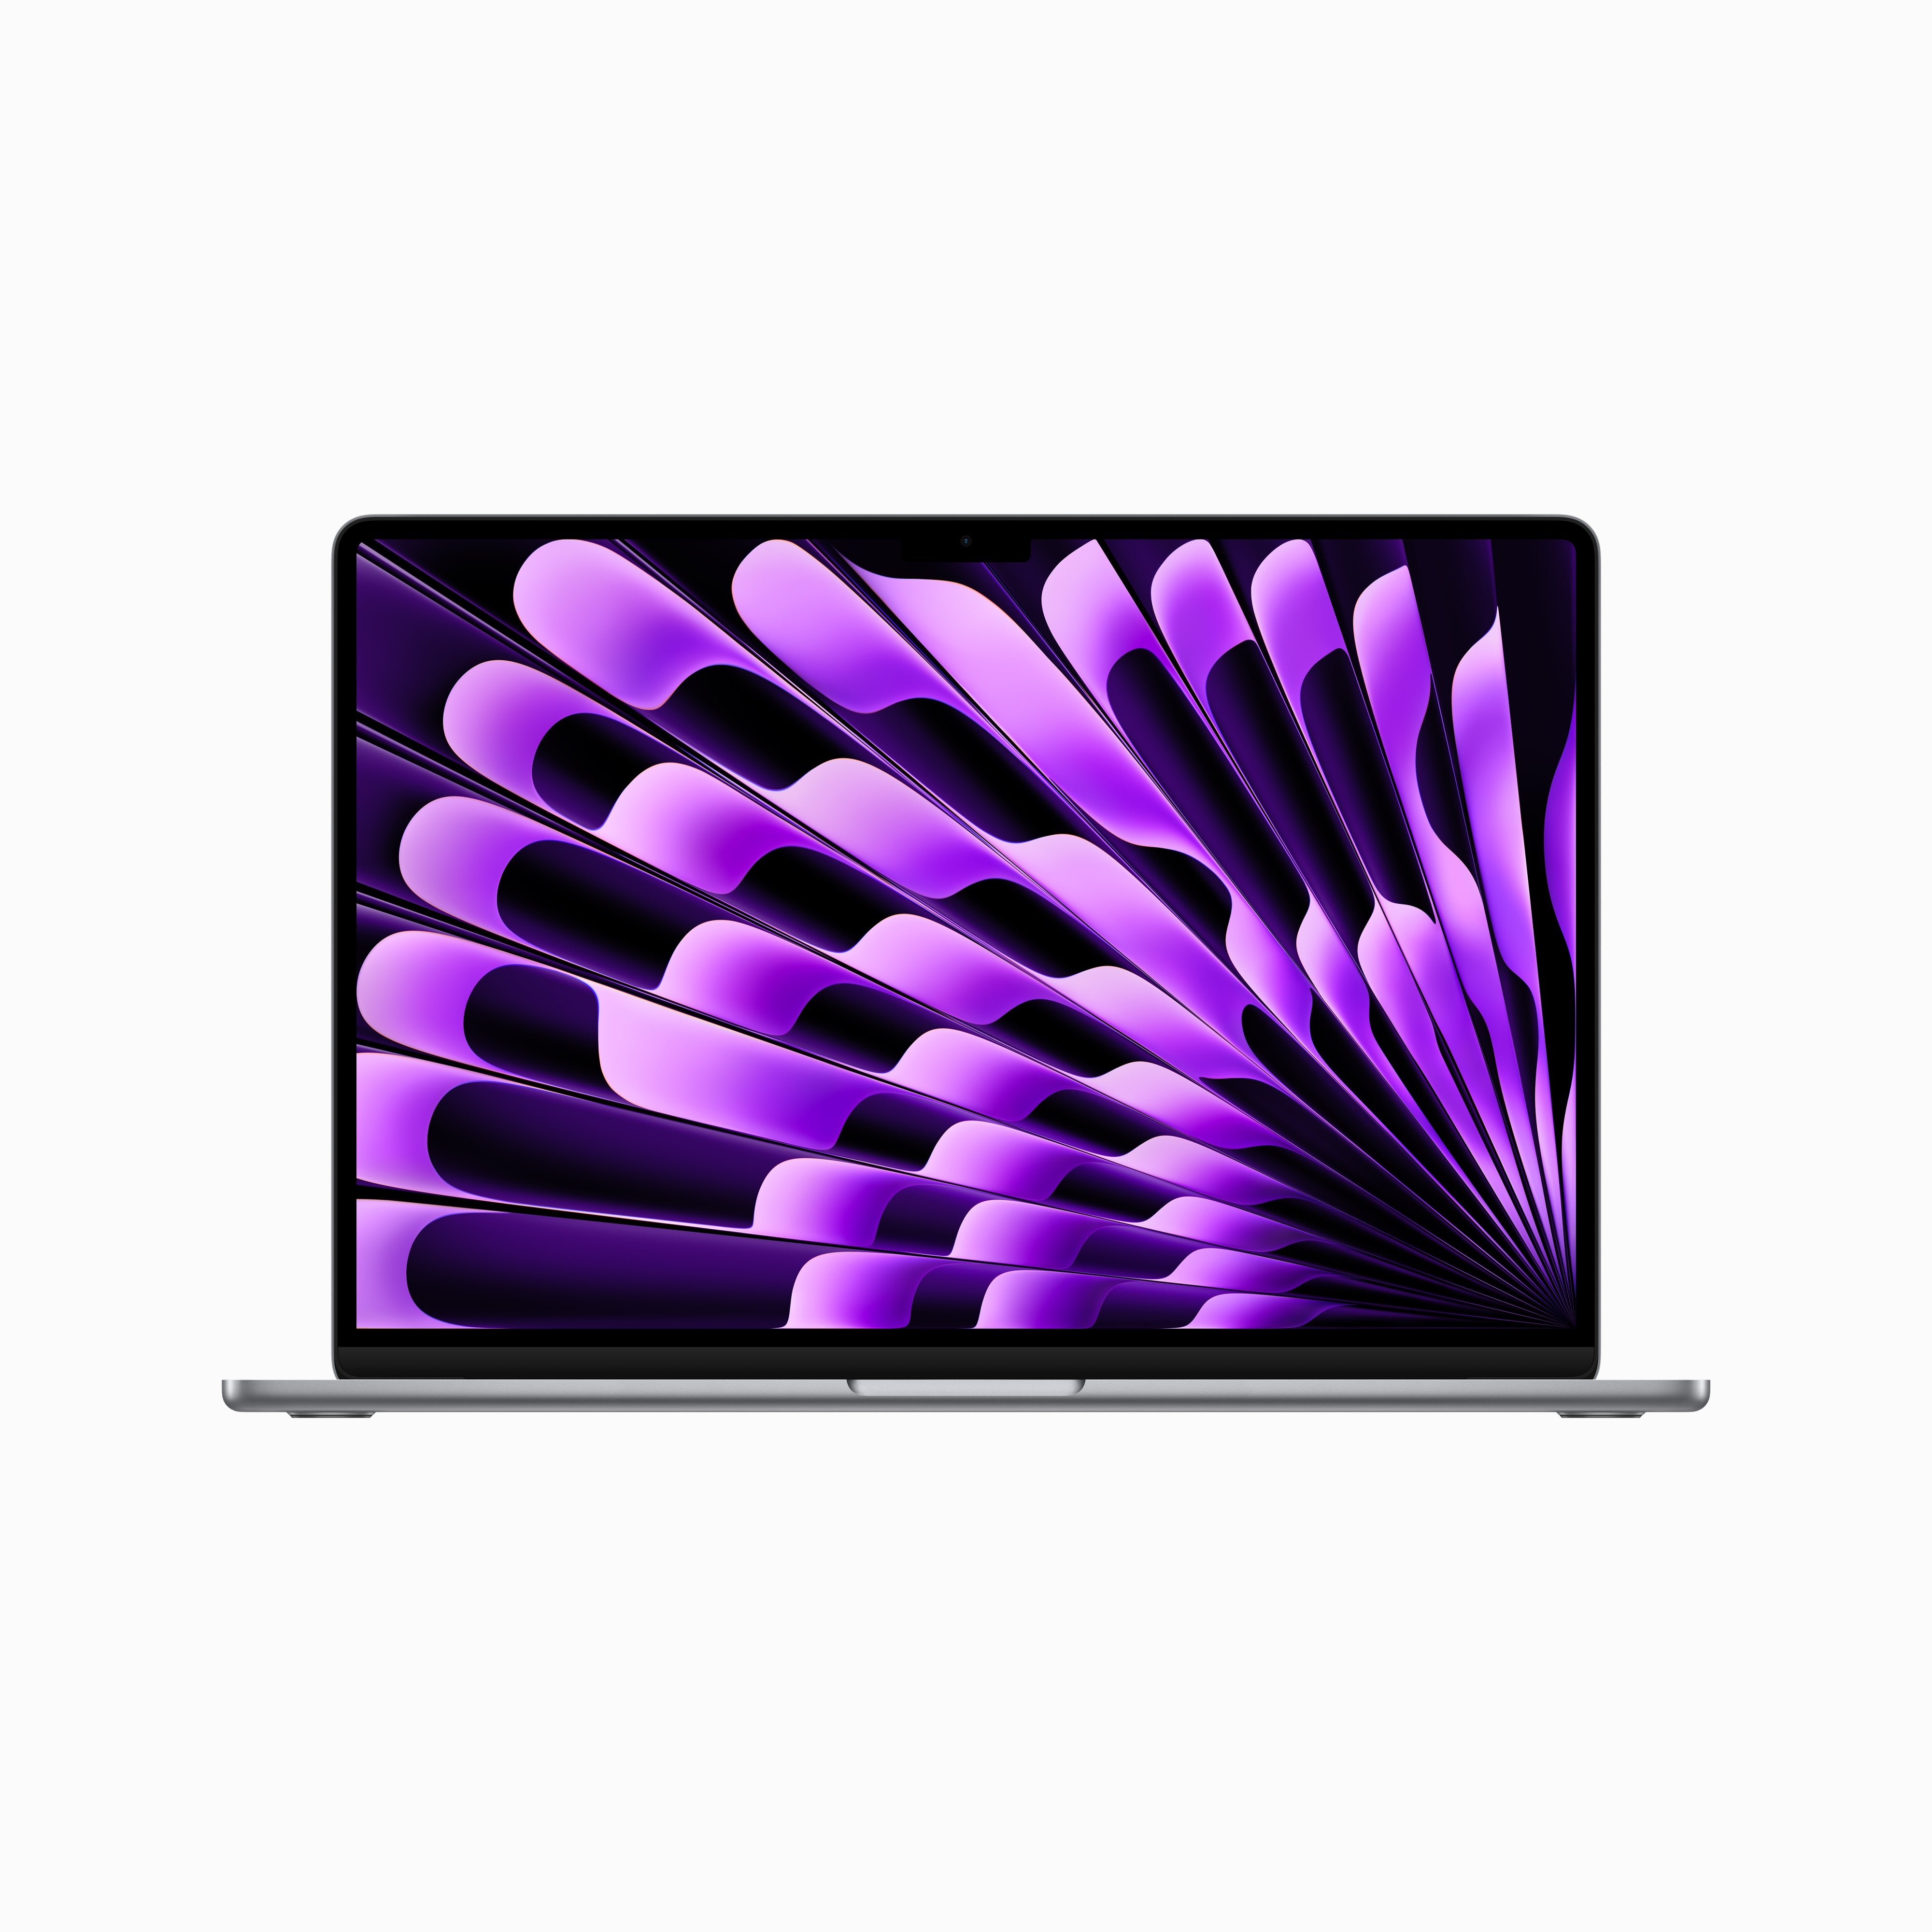 Apple MacBook Pro 15インチ 2019 スペースグレイ US